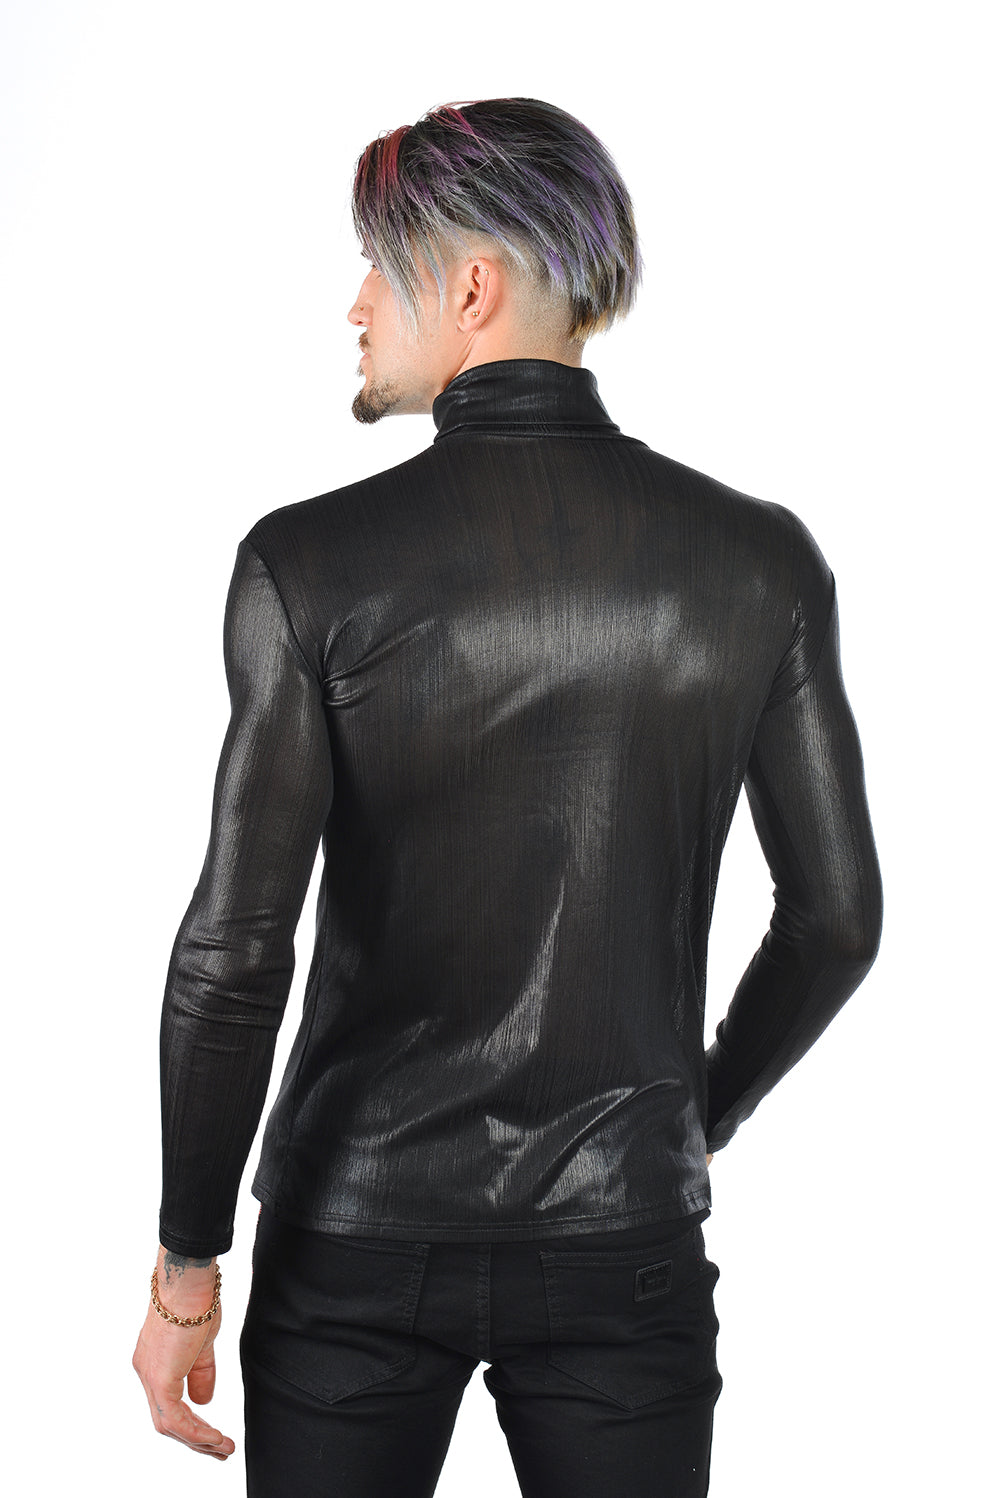 Barabas Men's Metallic Shiny Long Sleeve Turtle Neck Sweater 2KT1000 Black